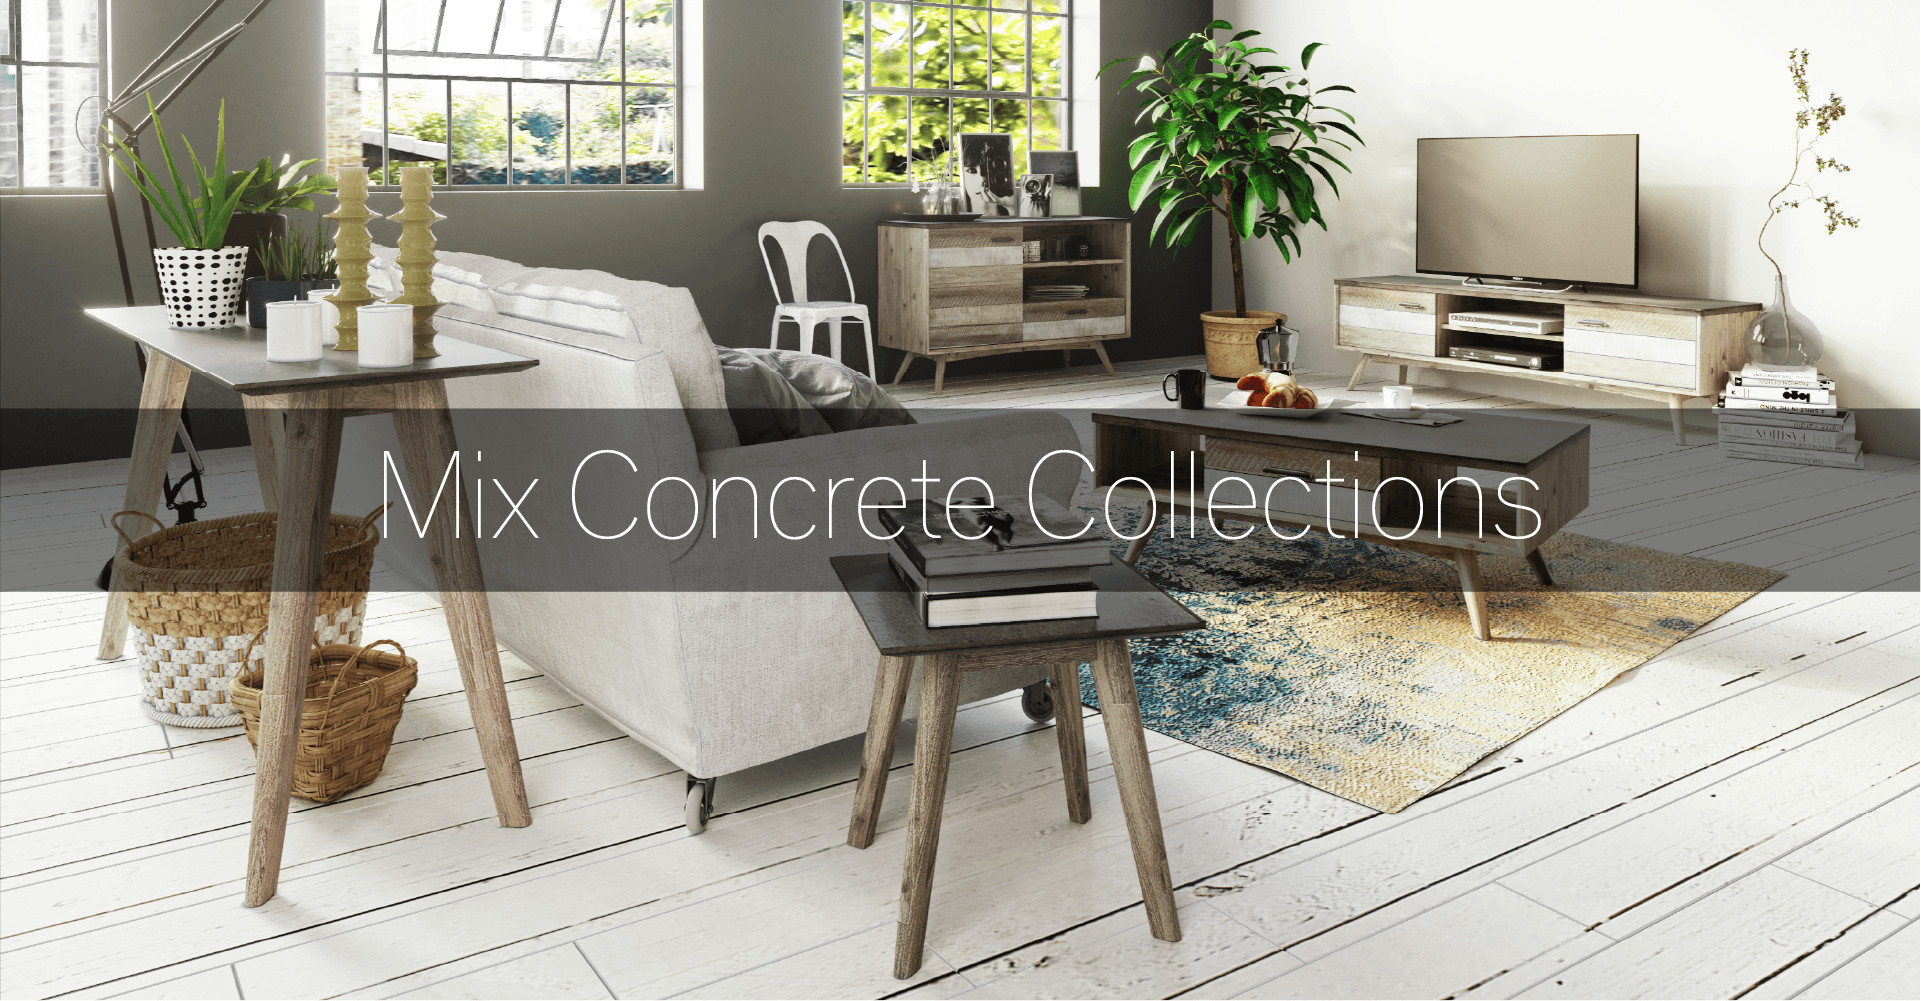 Mix Concrete